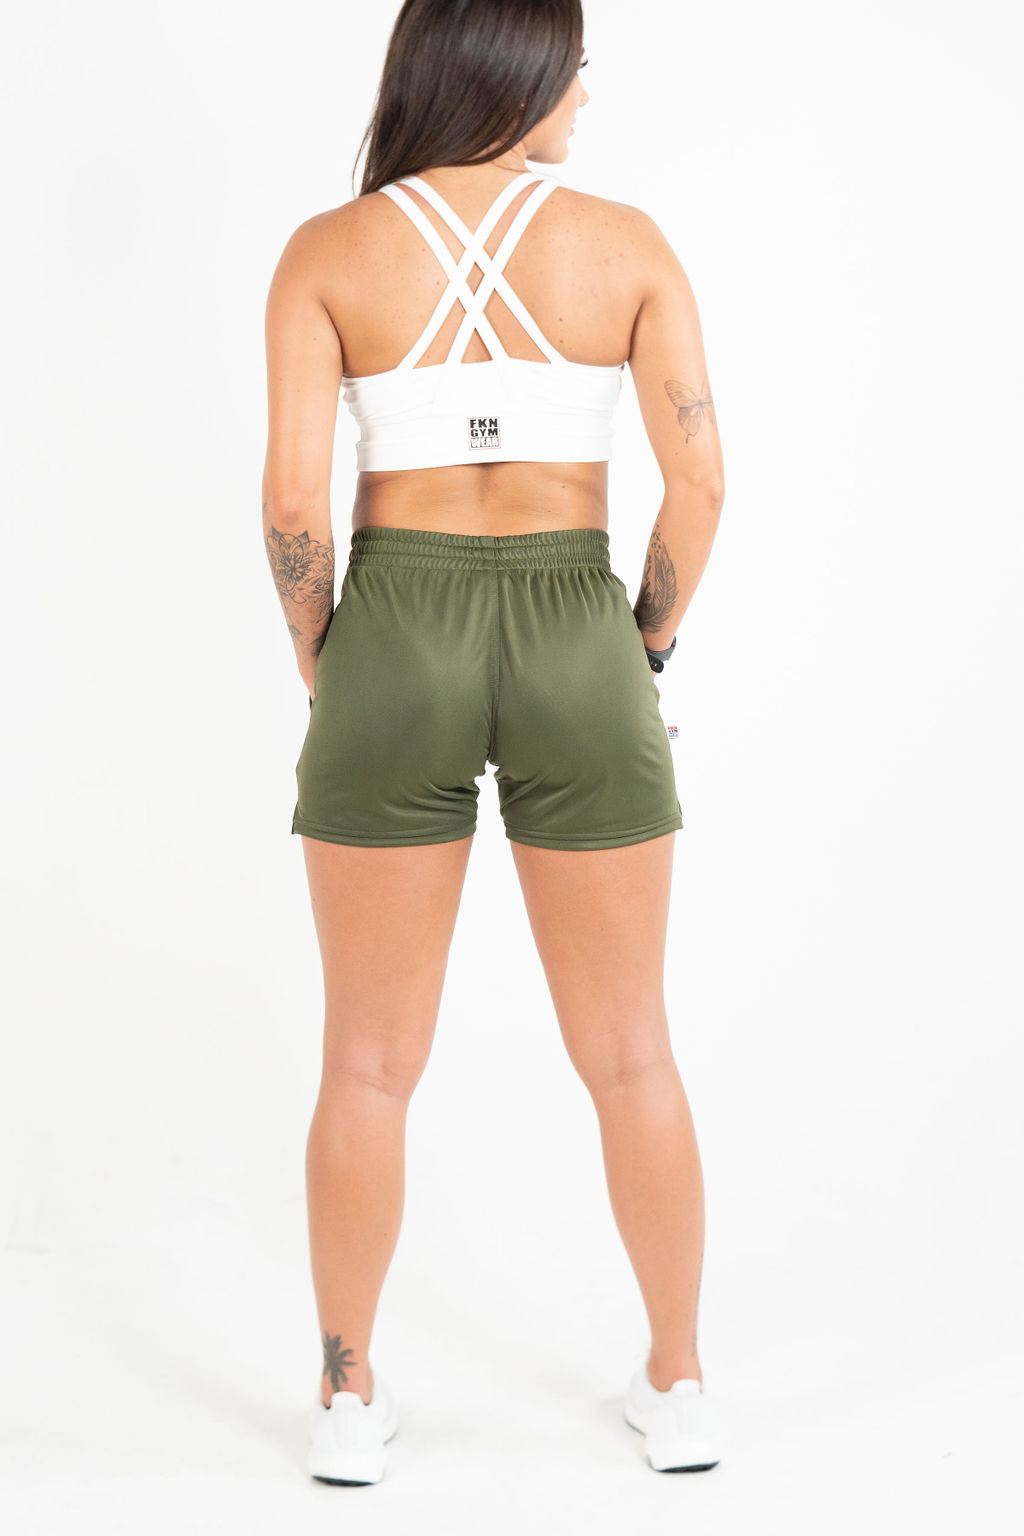 Bike Shorts with Pockets  Australia – FKN Gym Wear